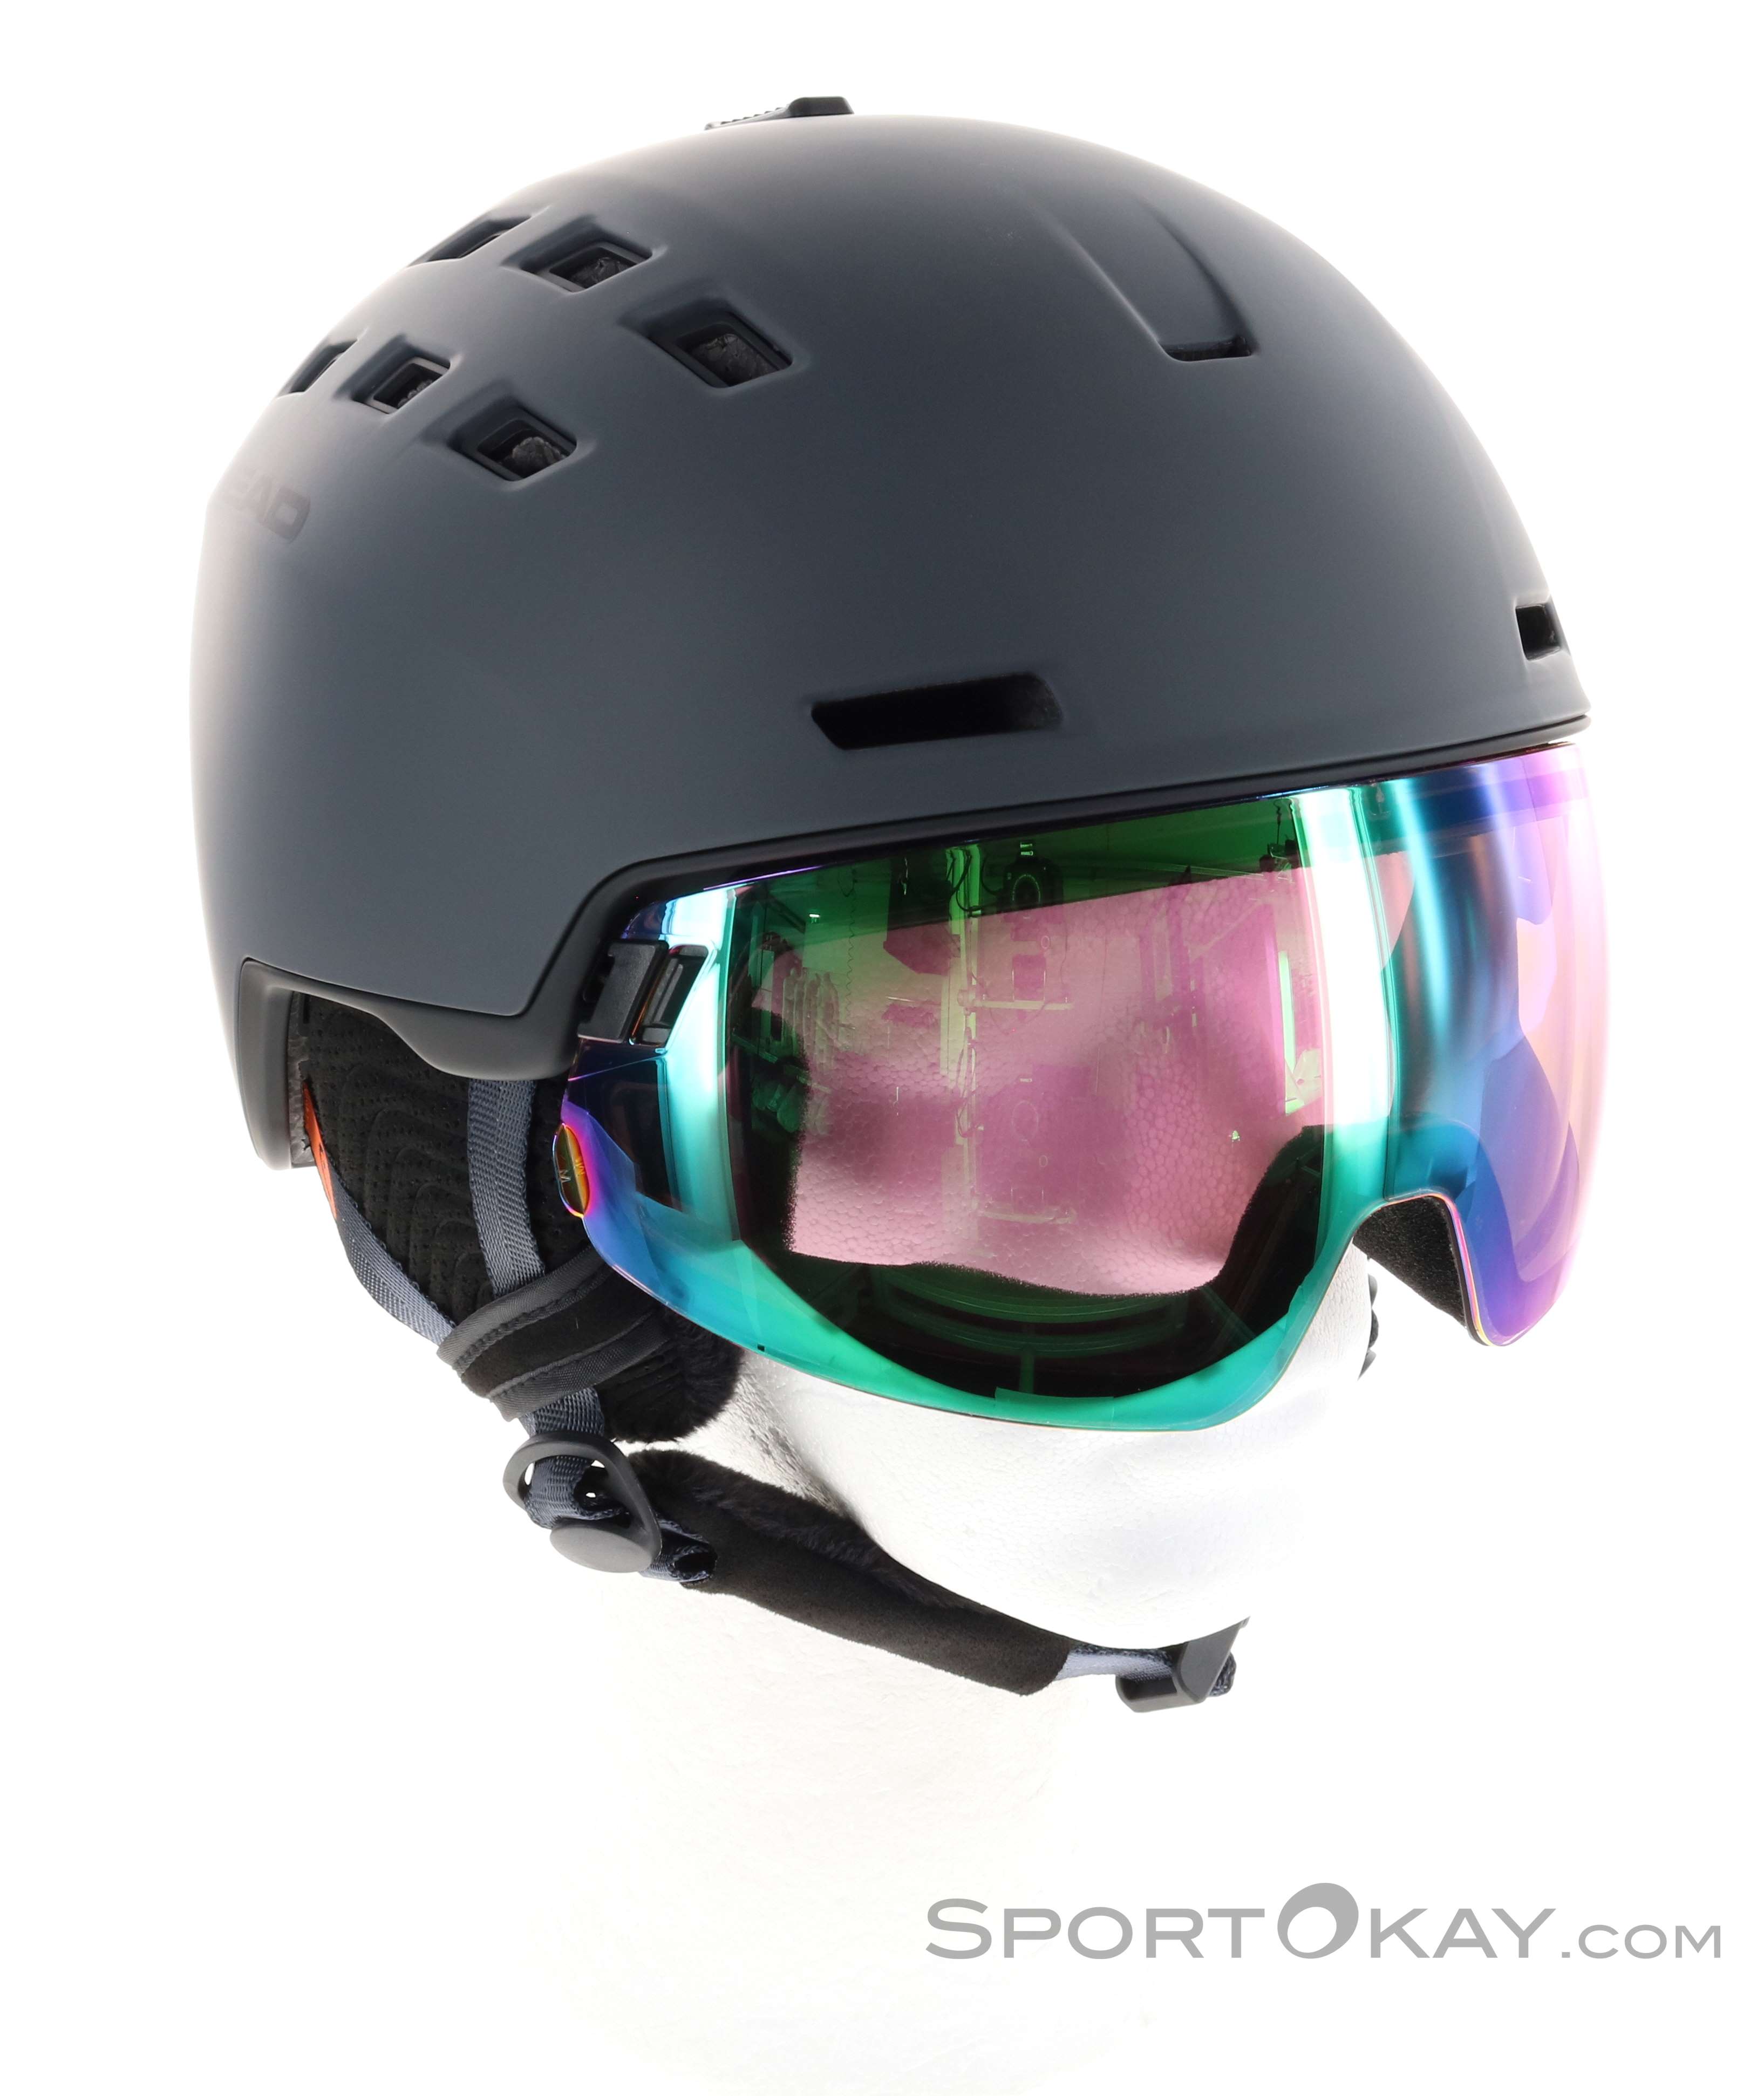  HEAD Radar Photo Visor Ski Helmet, Color: Anthracite, Size:  XS/S (323113-XS/S) : Sports & Outdoors